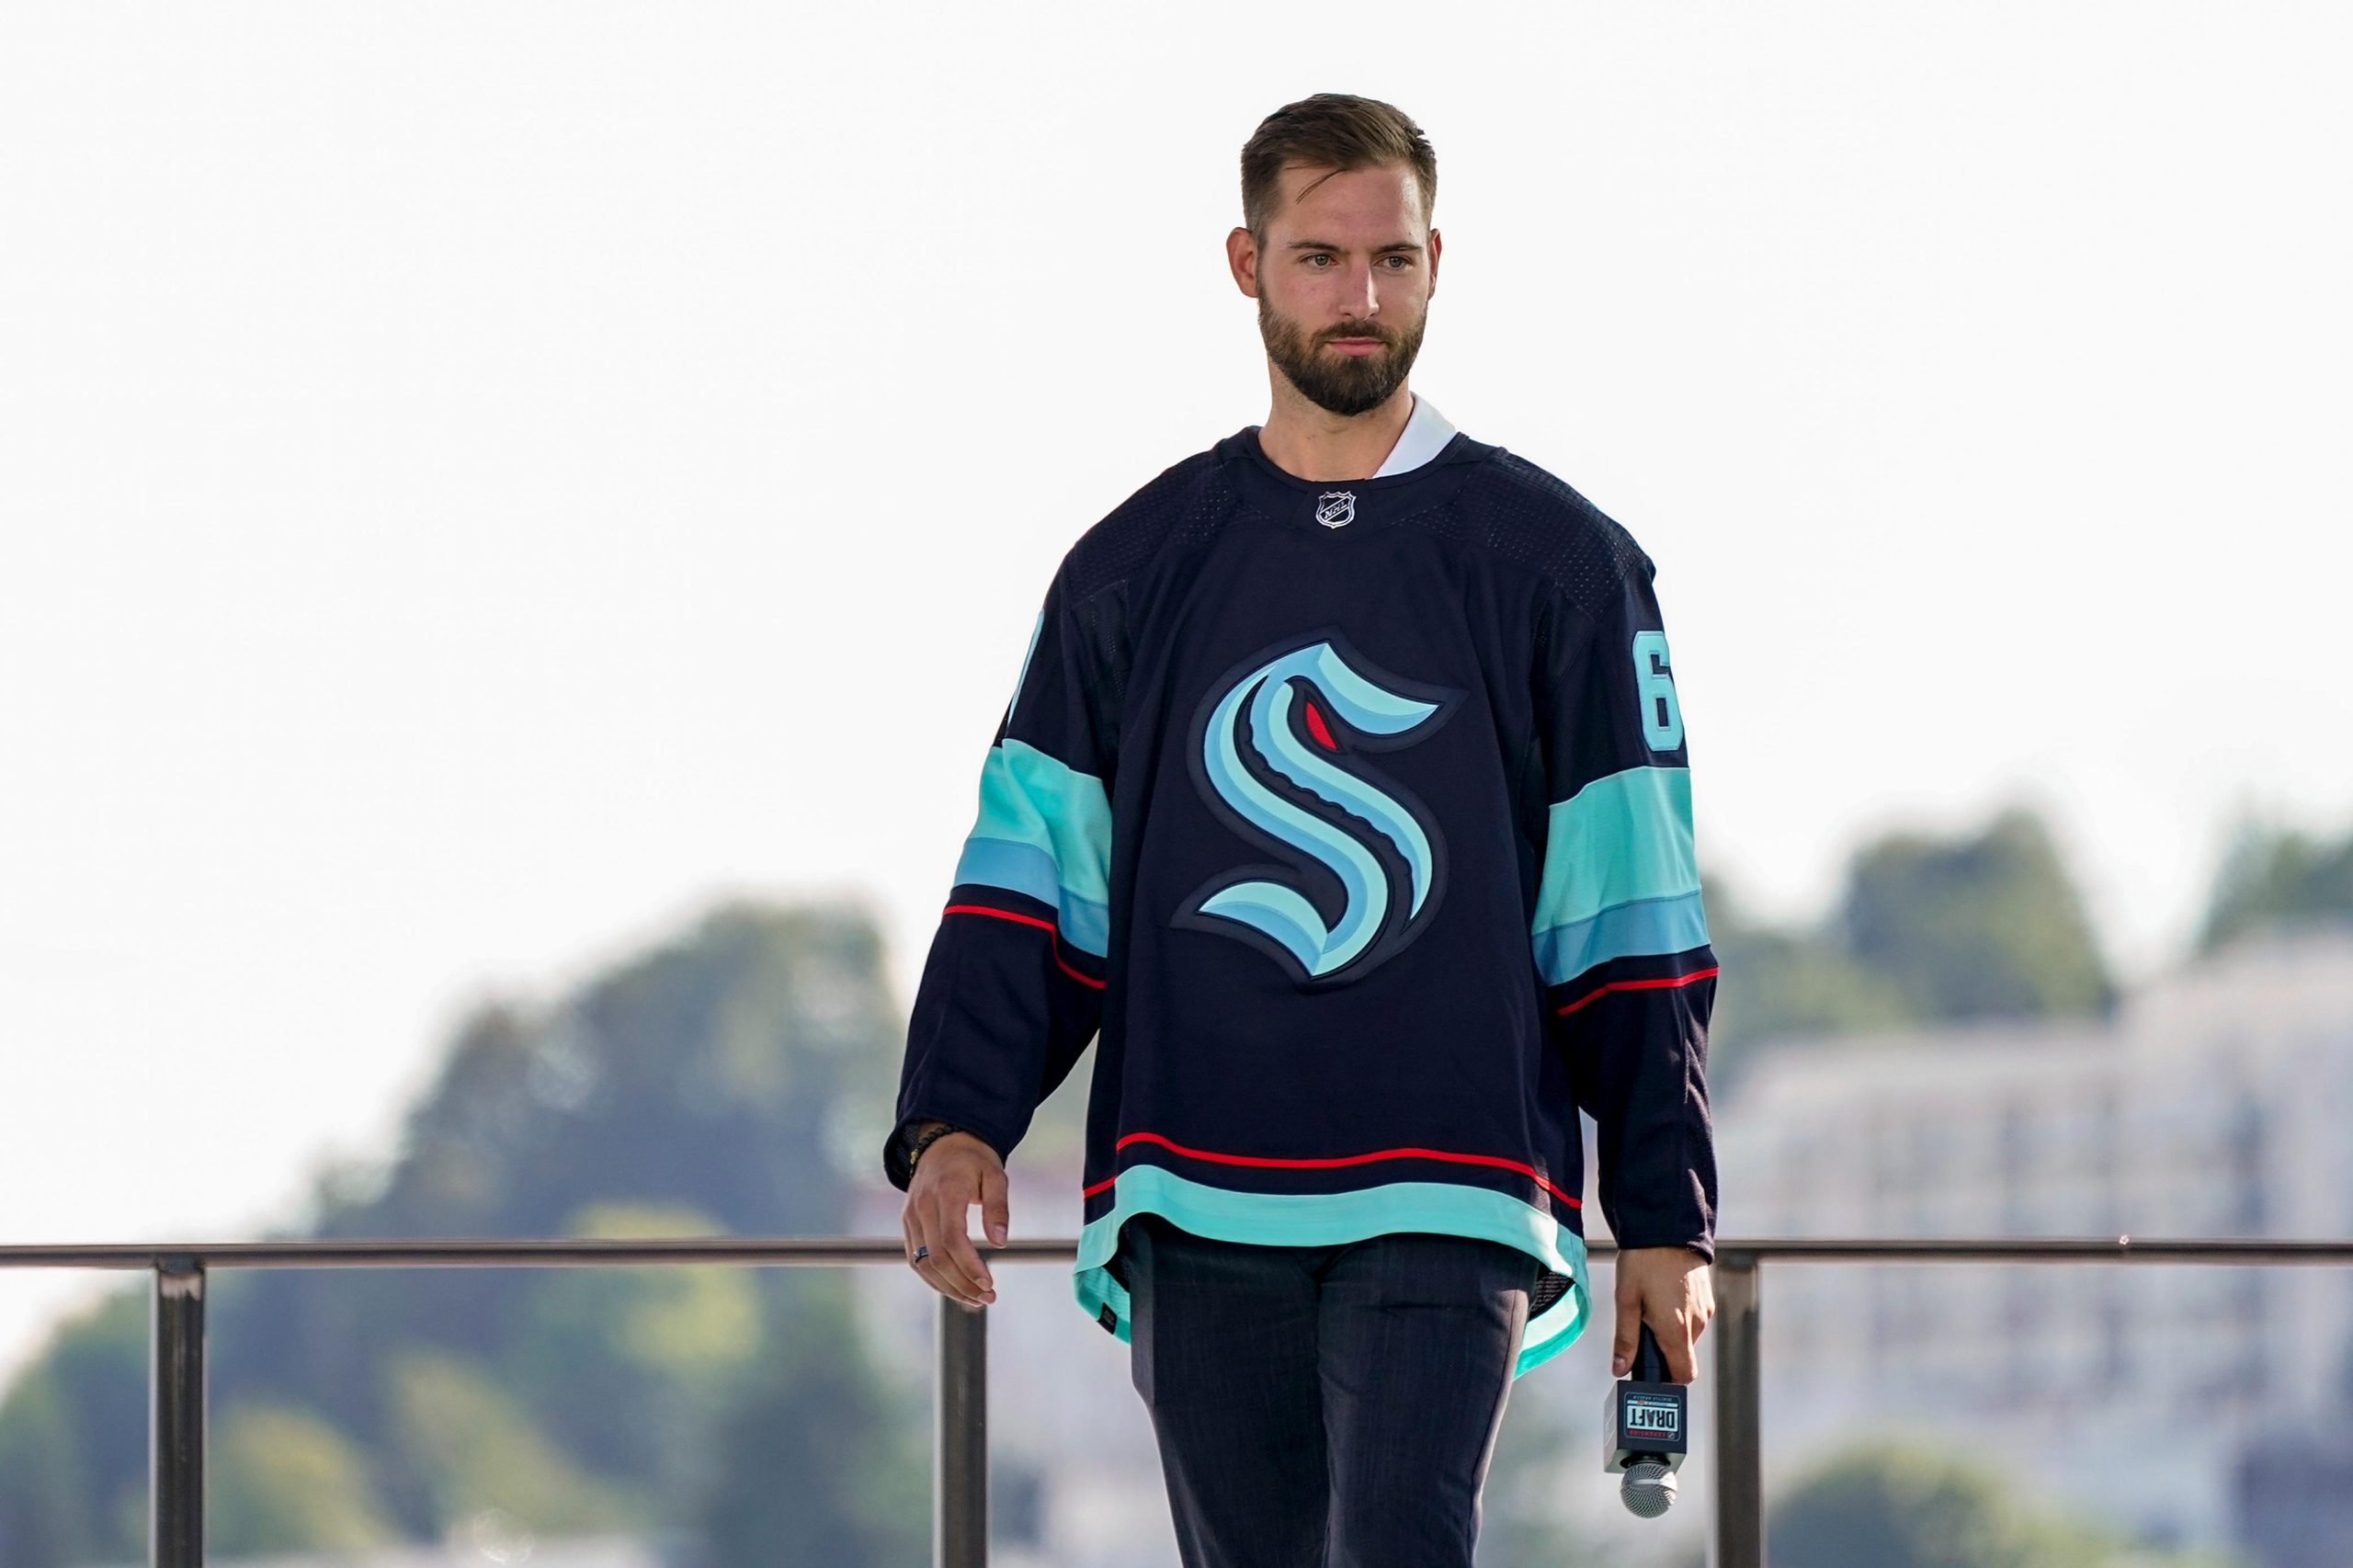 Seattle Kraken announced as NHL expansion team name; jersey design